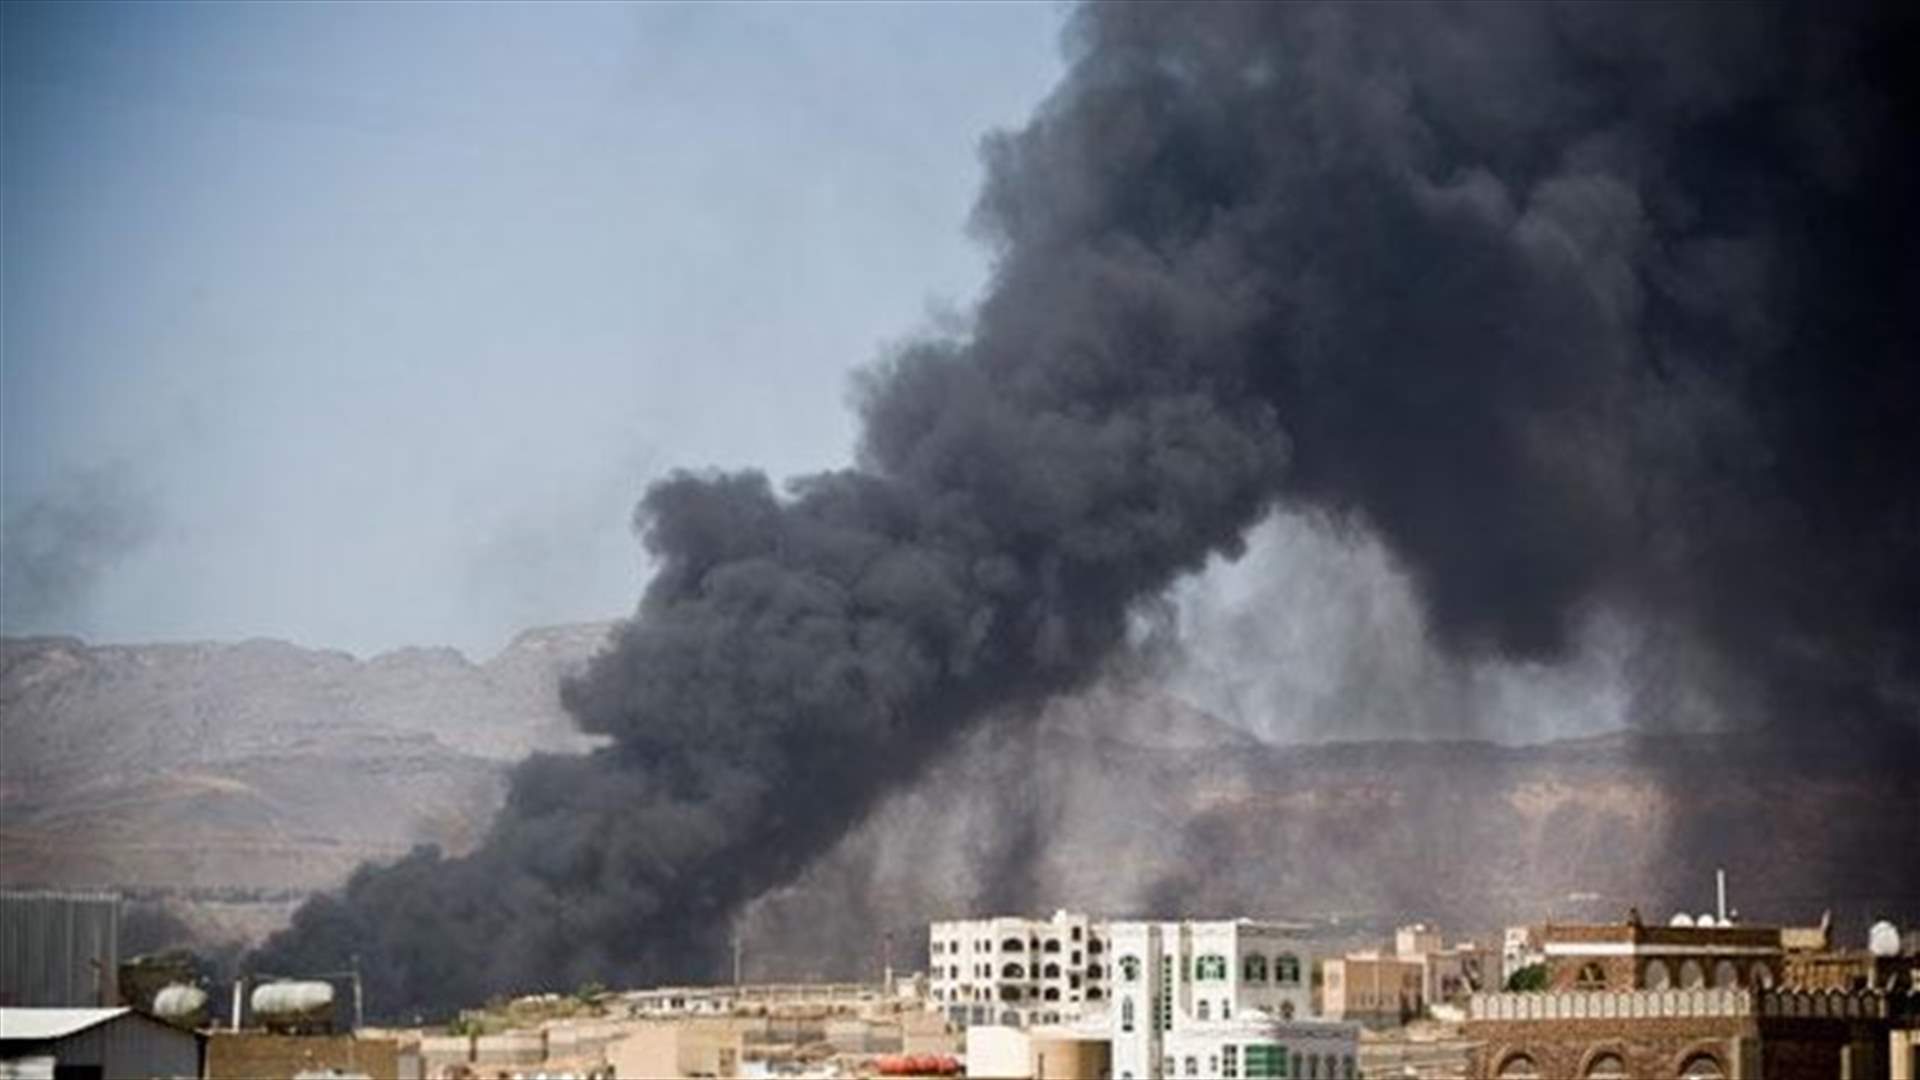 Rockets into S. Arabia, reported air strikes in Yemen strain truce